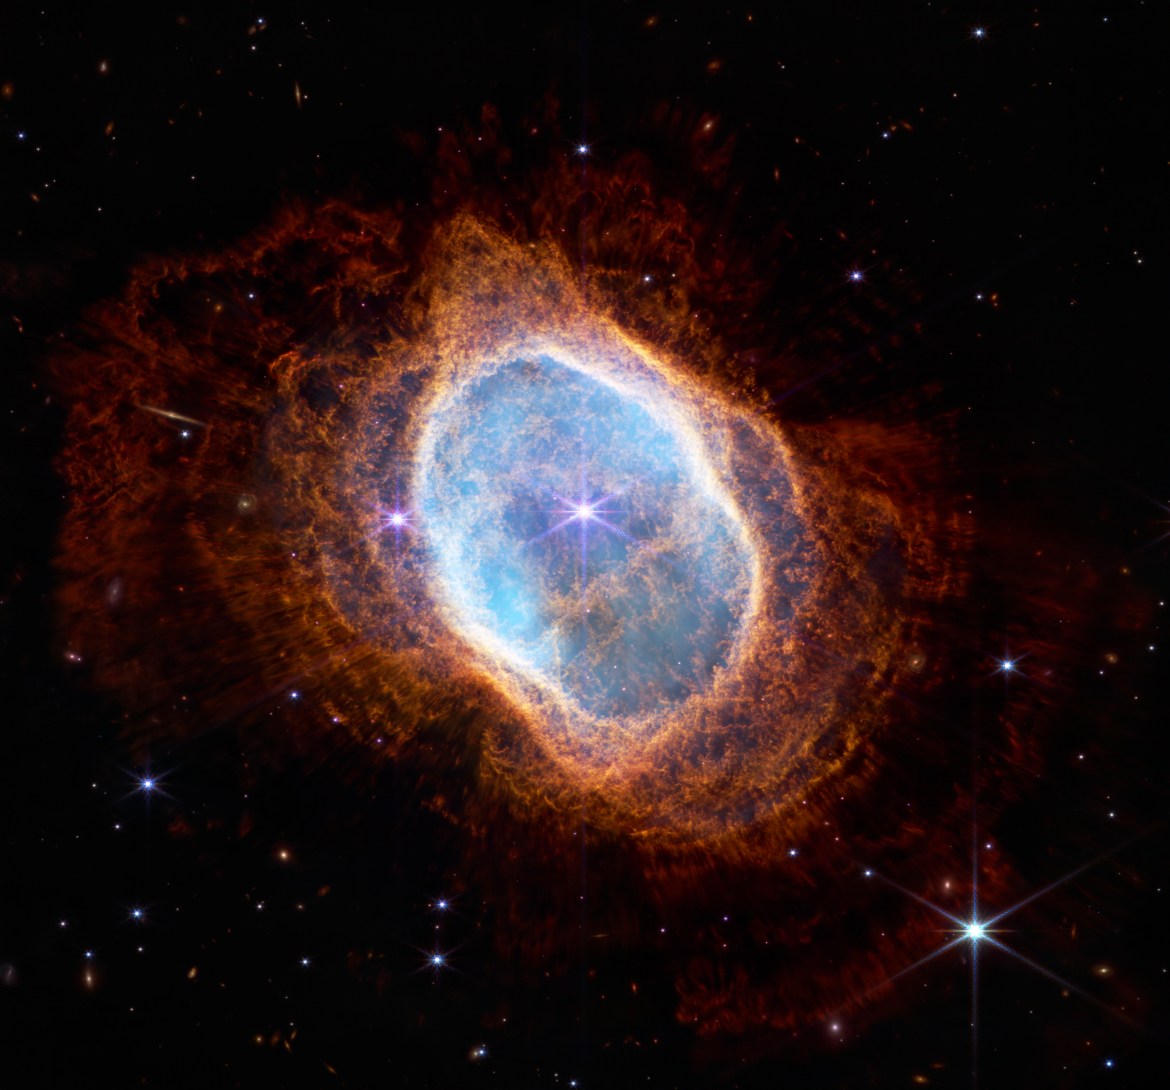 NASA's new telescope shows star death, dancing galaxies